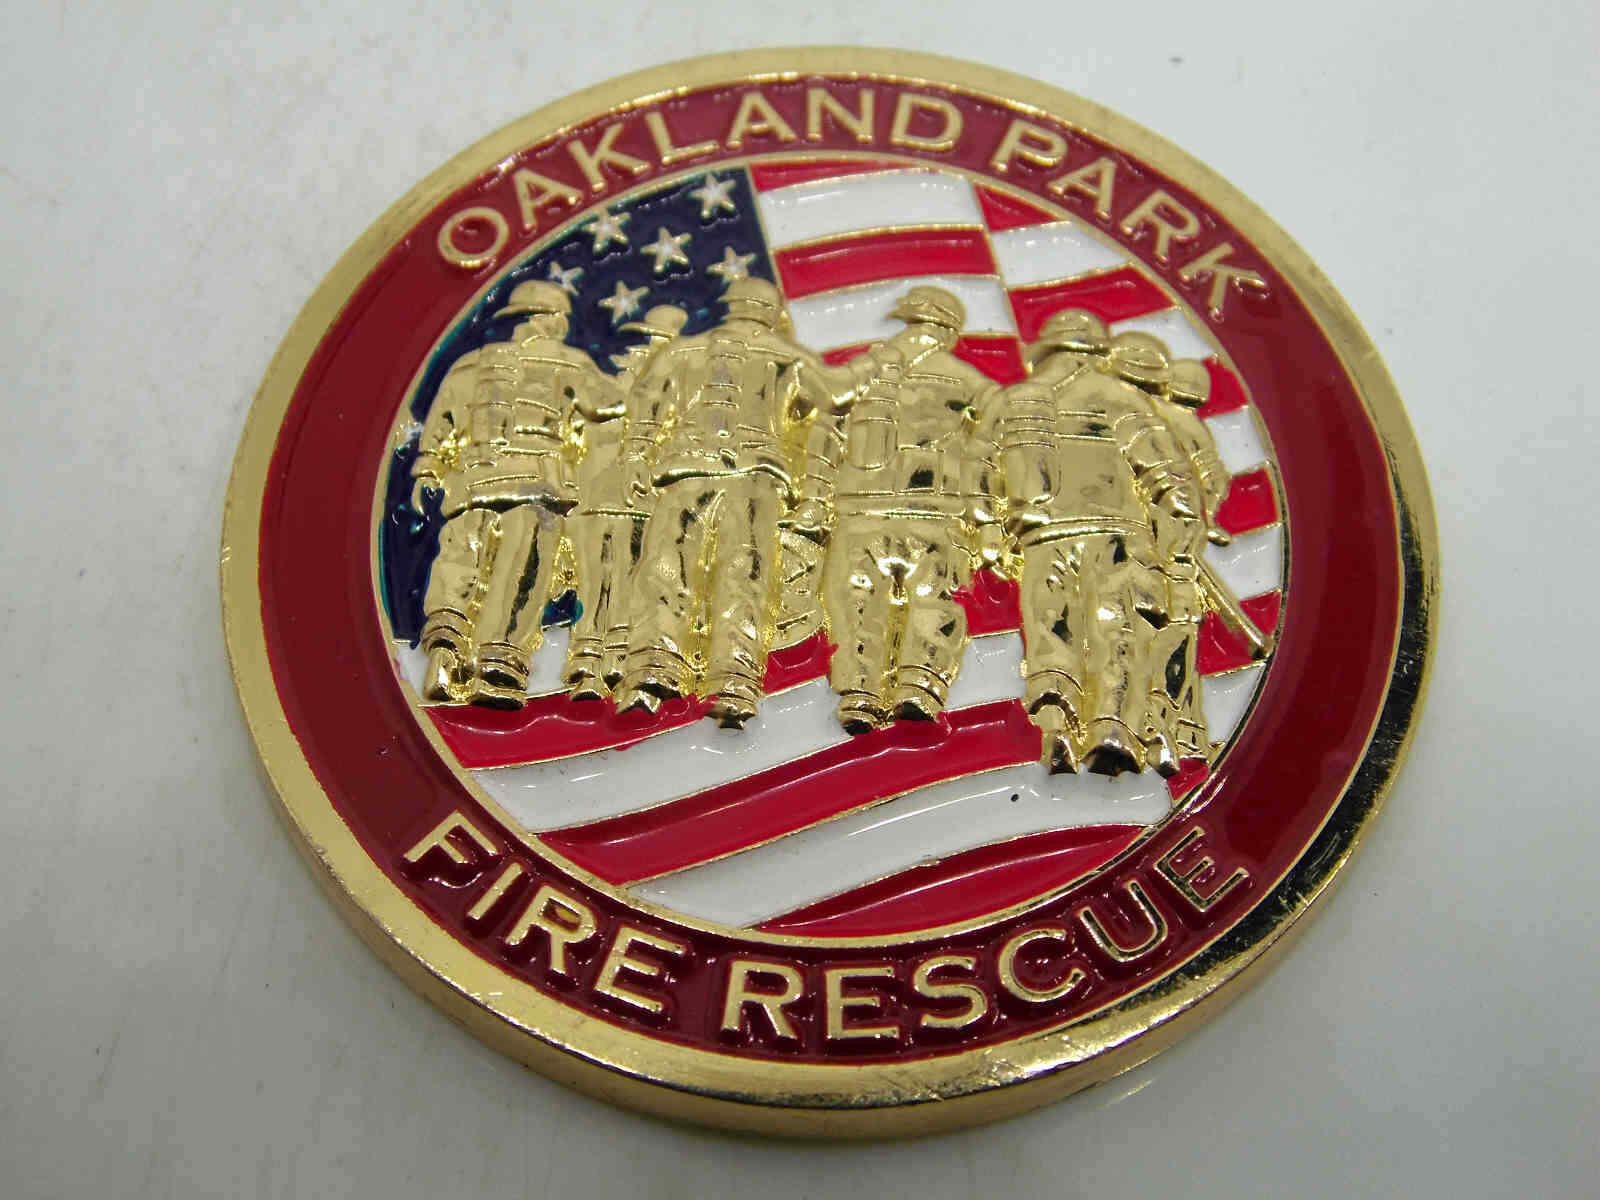 OAKLAND PARK FIRE RESCUE FIRE CHALLENGE COIN